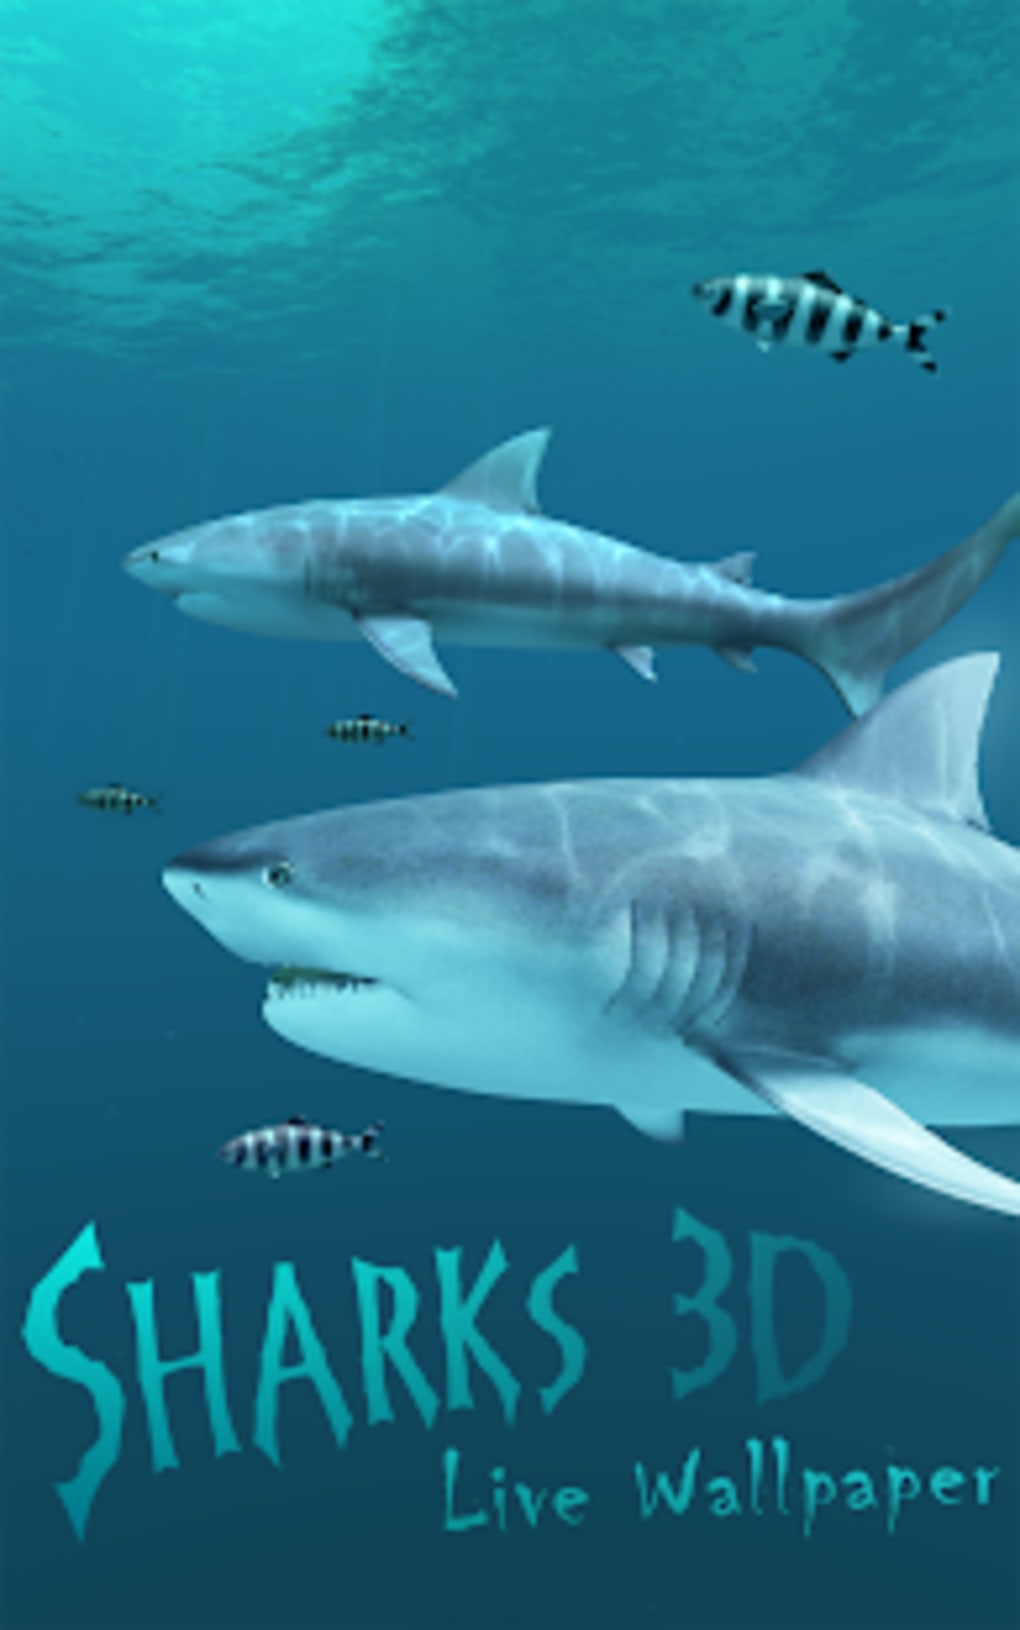 sharks 3d live wallpaper and screensavers